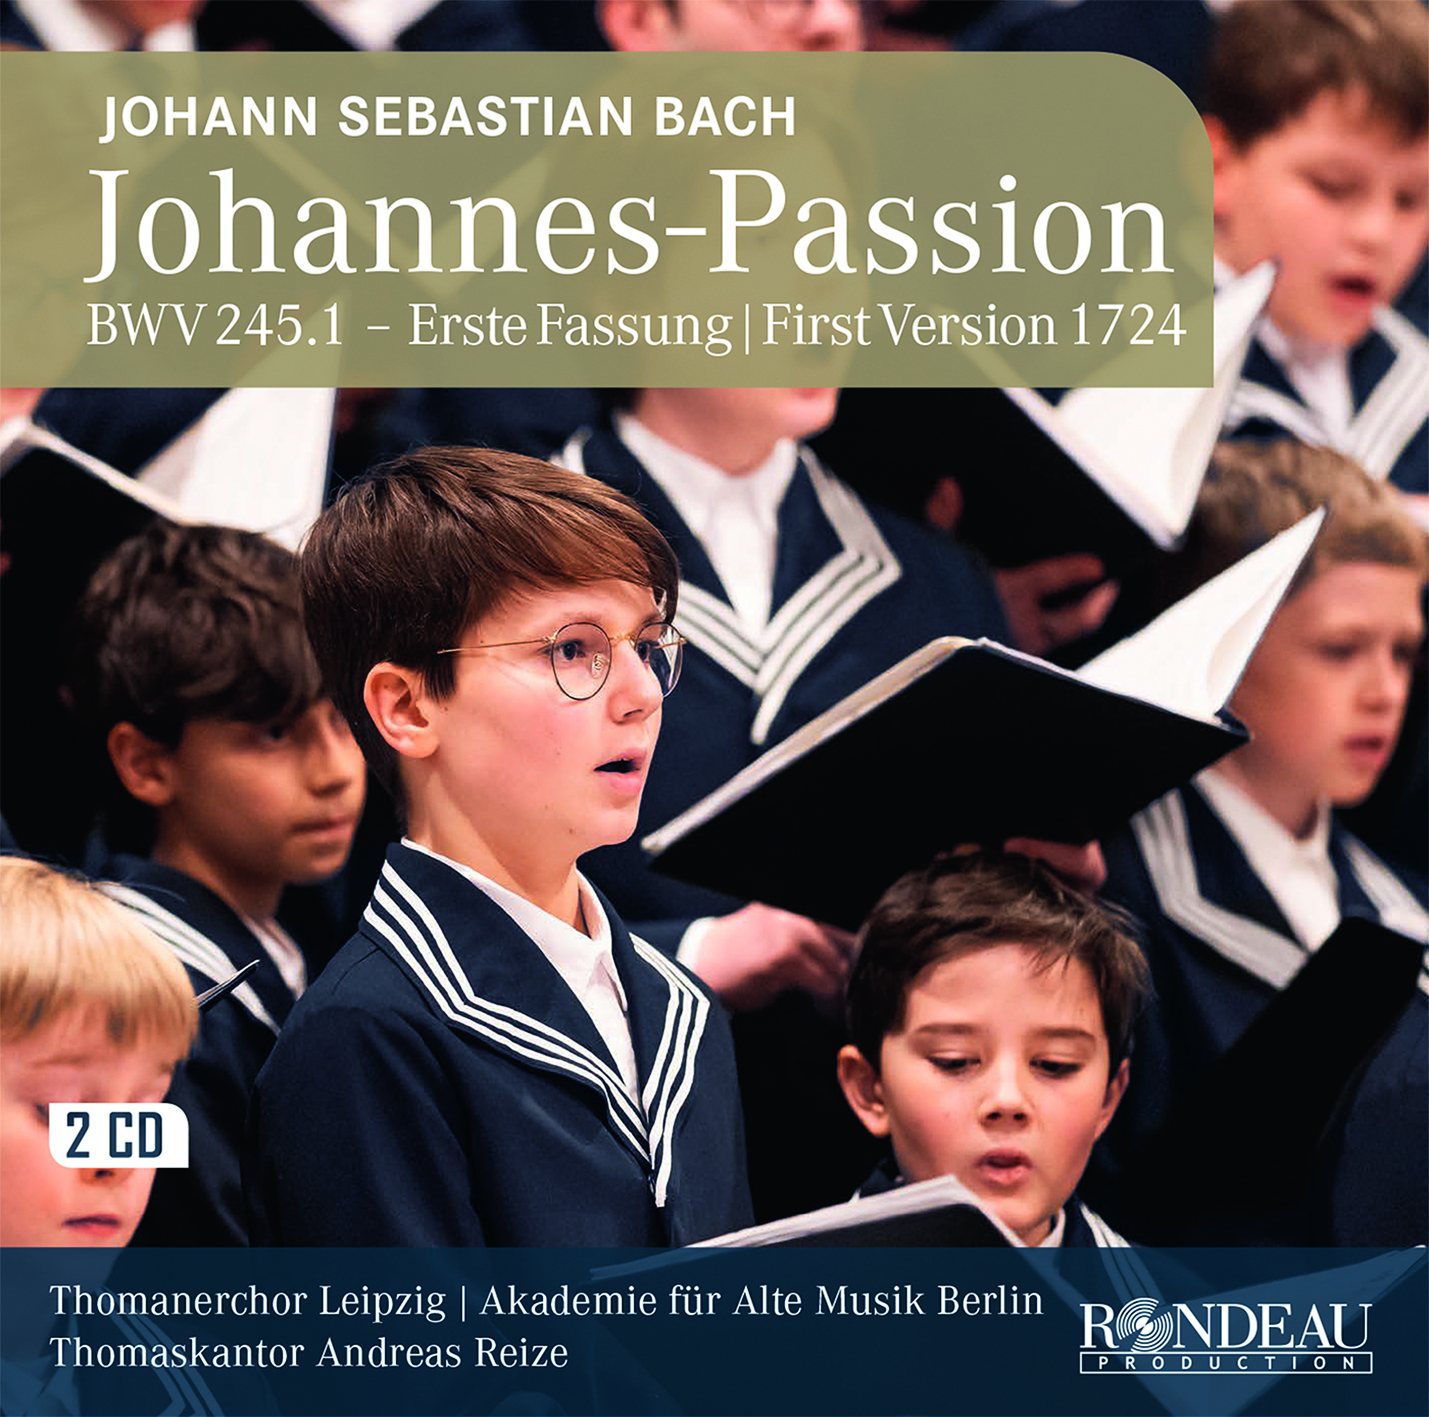 CD «Johannes-Passion» BWV 245.1